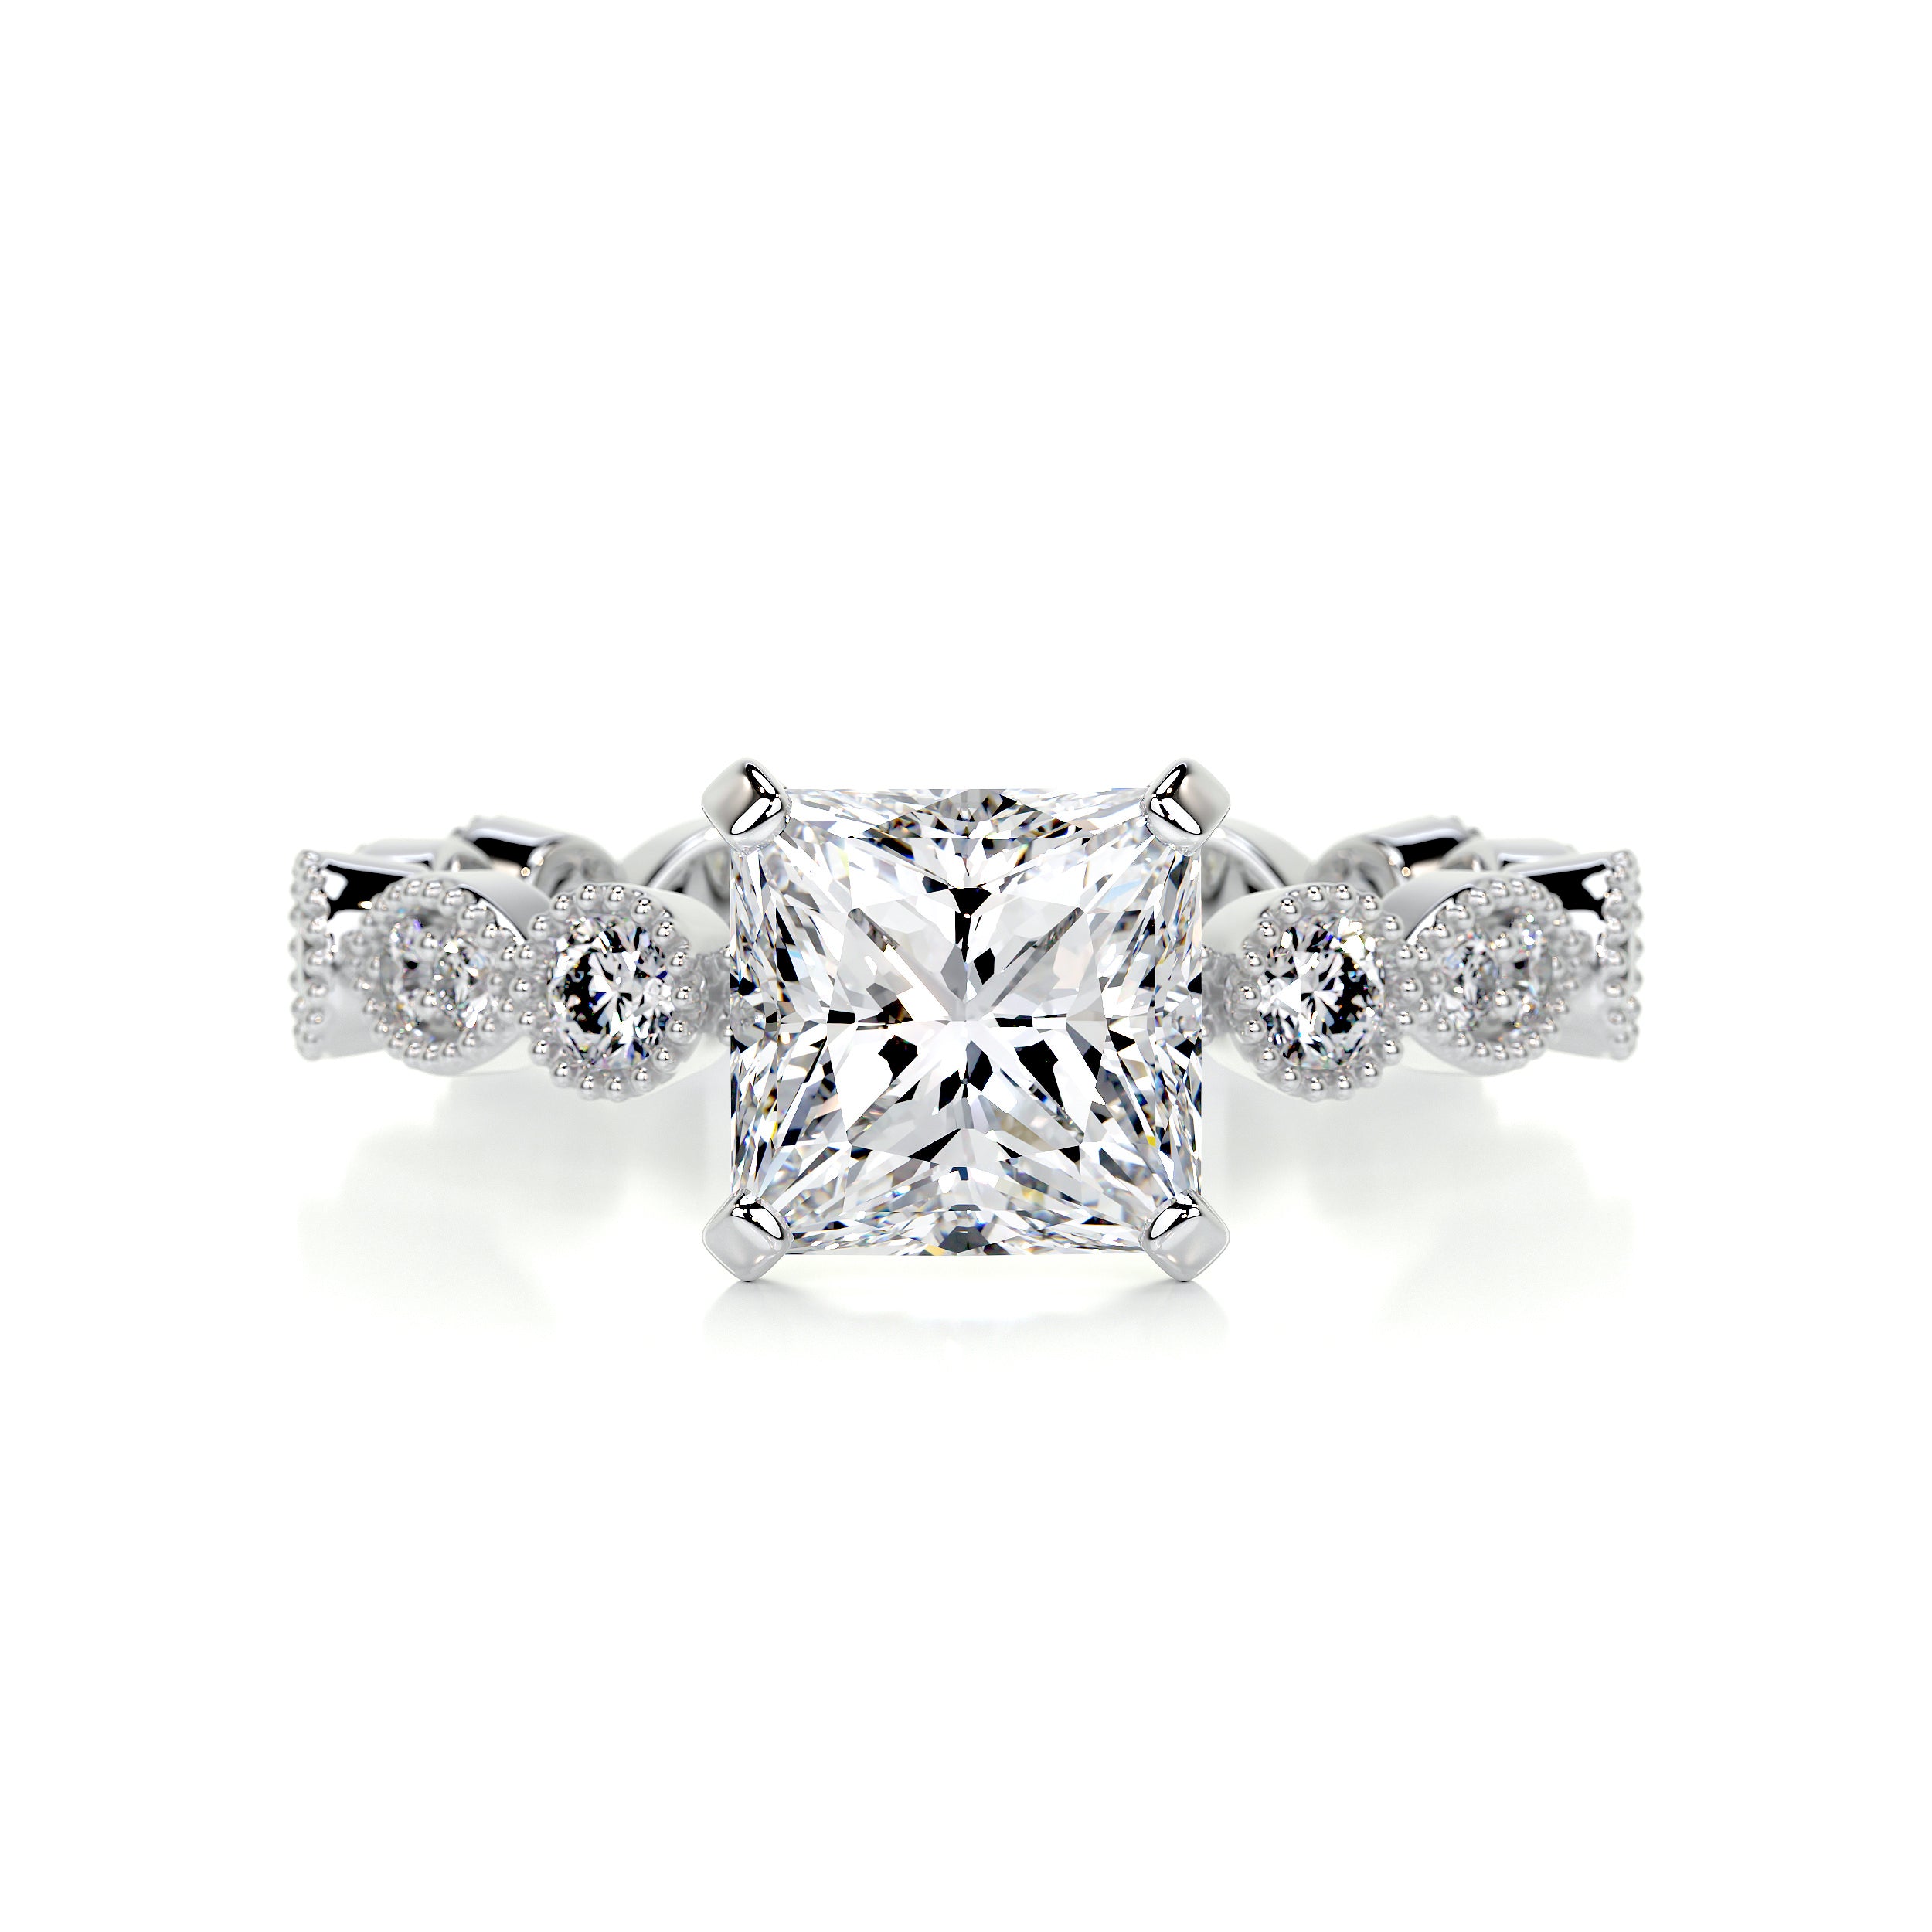 Amelia Diamond Engagement Ring   (2.5 Carat) -18K White Gold